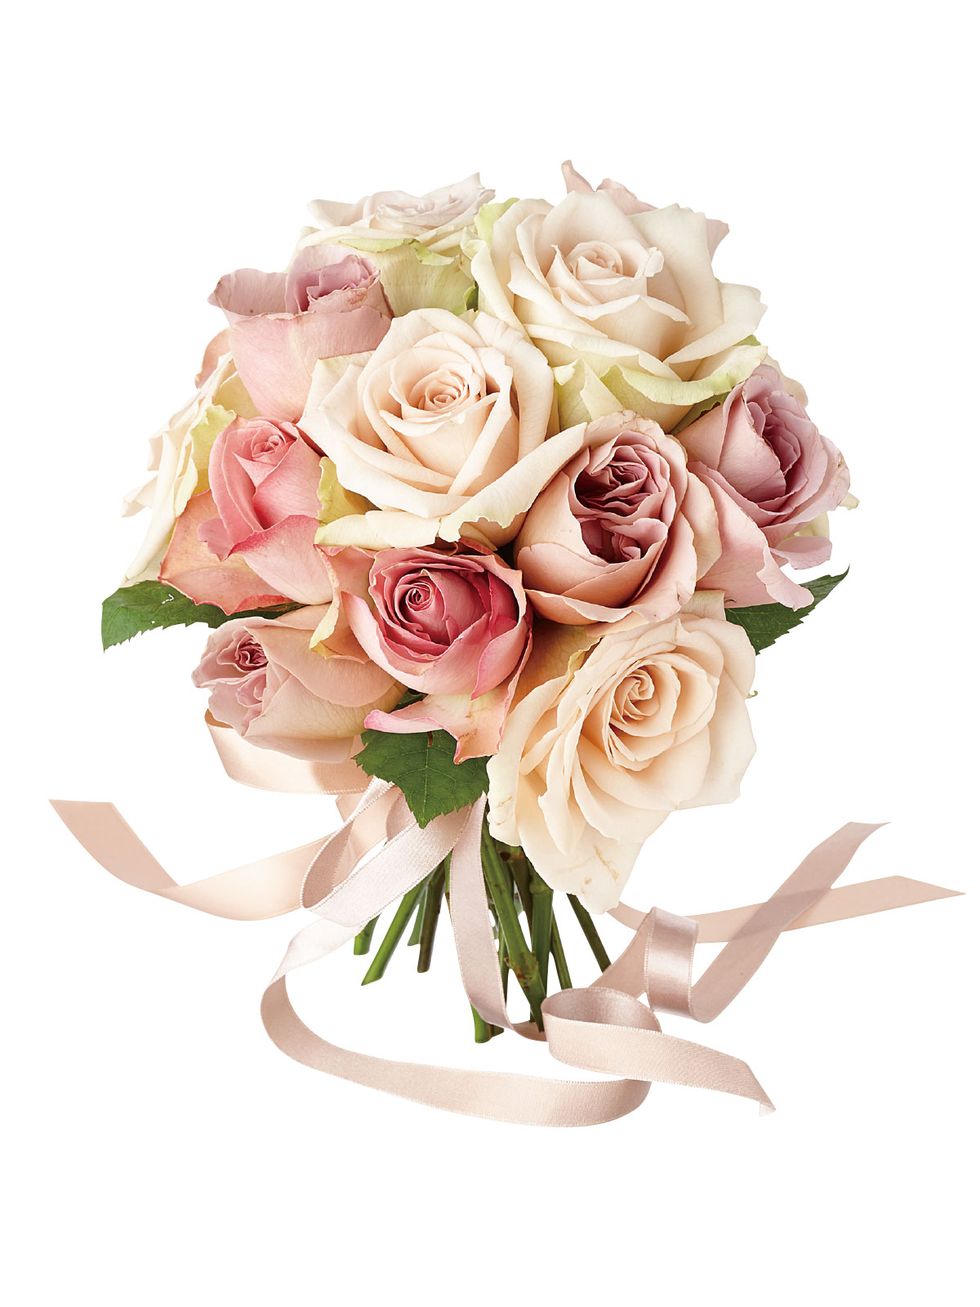 Flower, Bouquet, Cut flowers, Rose, Garden roses, Pink, Plant, Rose family, Rosa × centifolia, Flowering plant, 